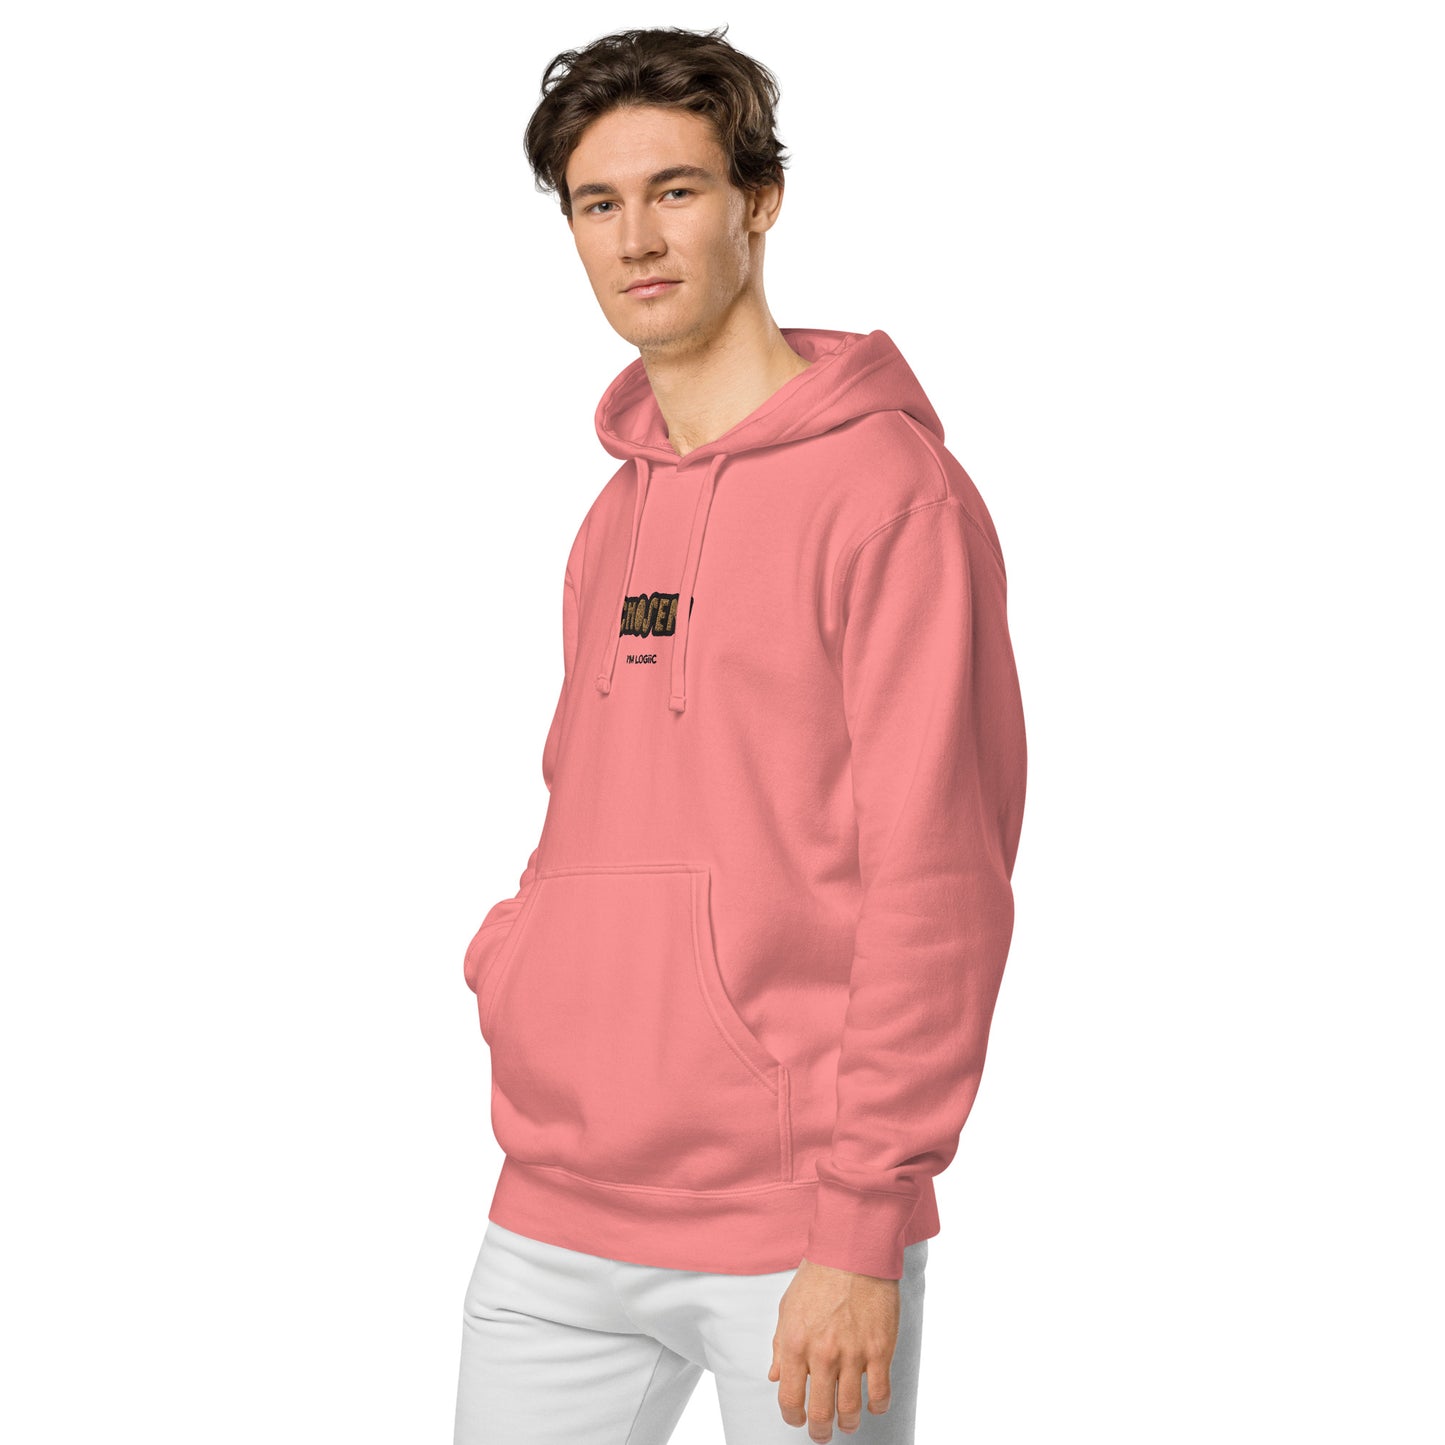 Chosen Unisex pigment-dyed hoodie